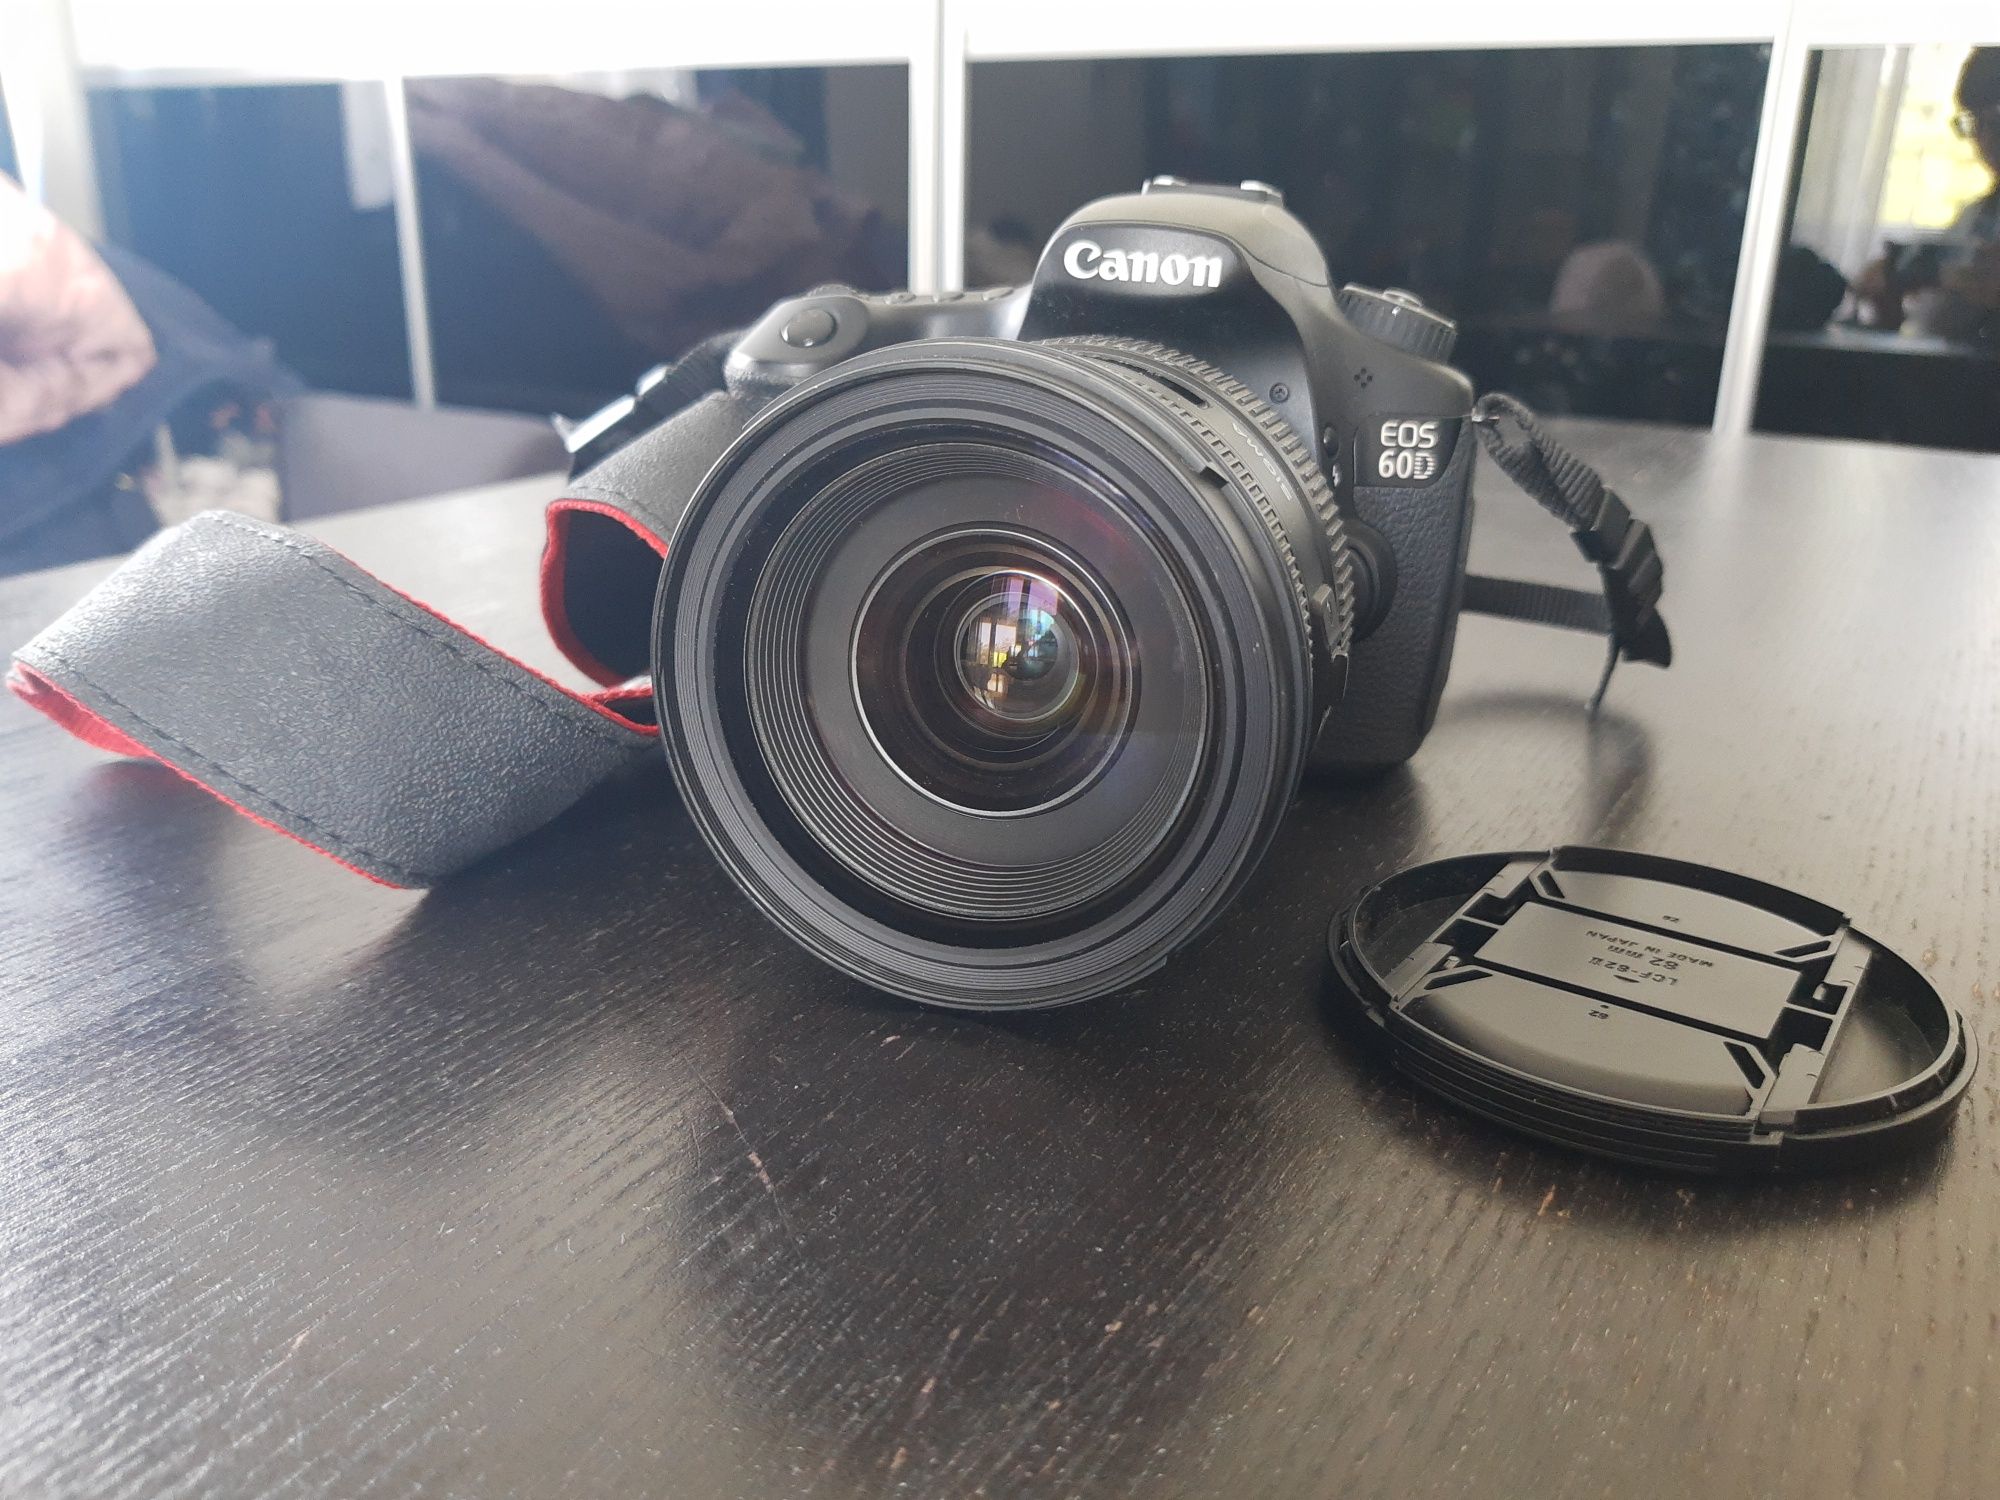 Aparat Canon EOS60D z obiektywem Sigma 24-70mm 1:2.8 DG HSM oraz filtr